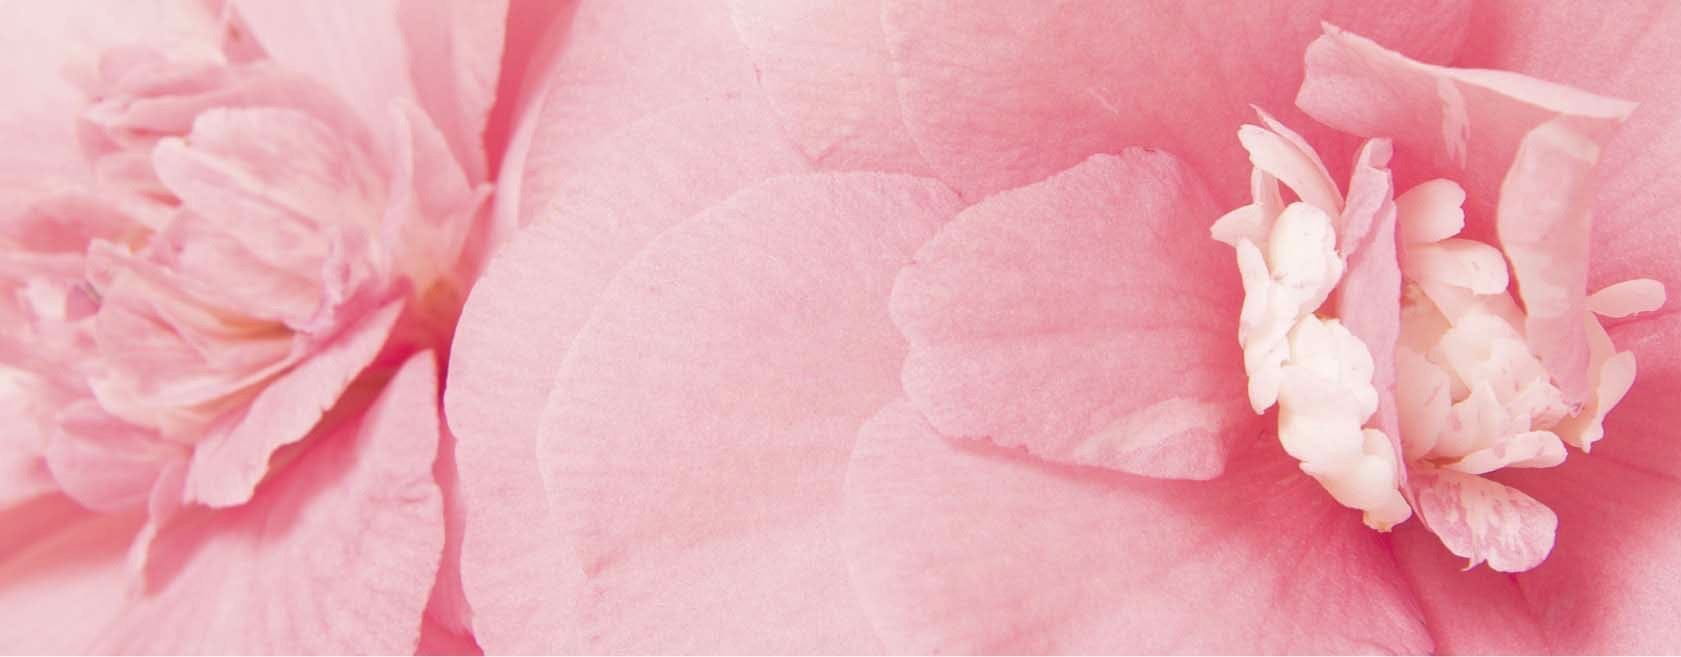 camellia japonica for skin